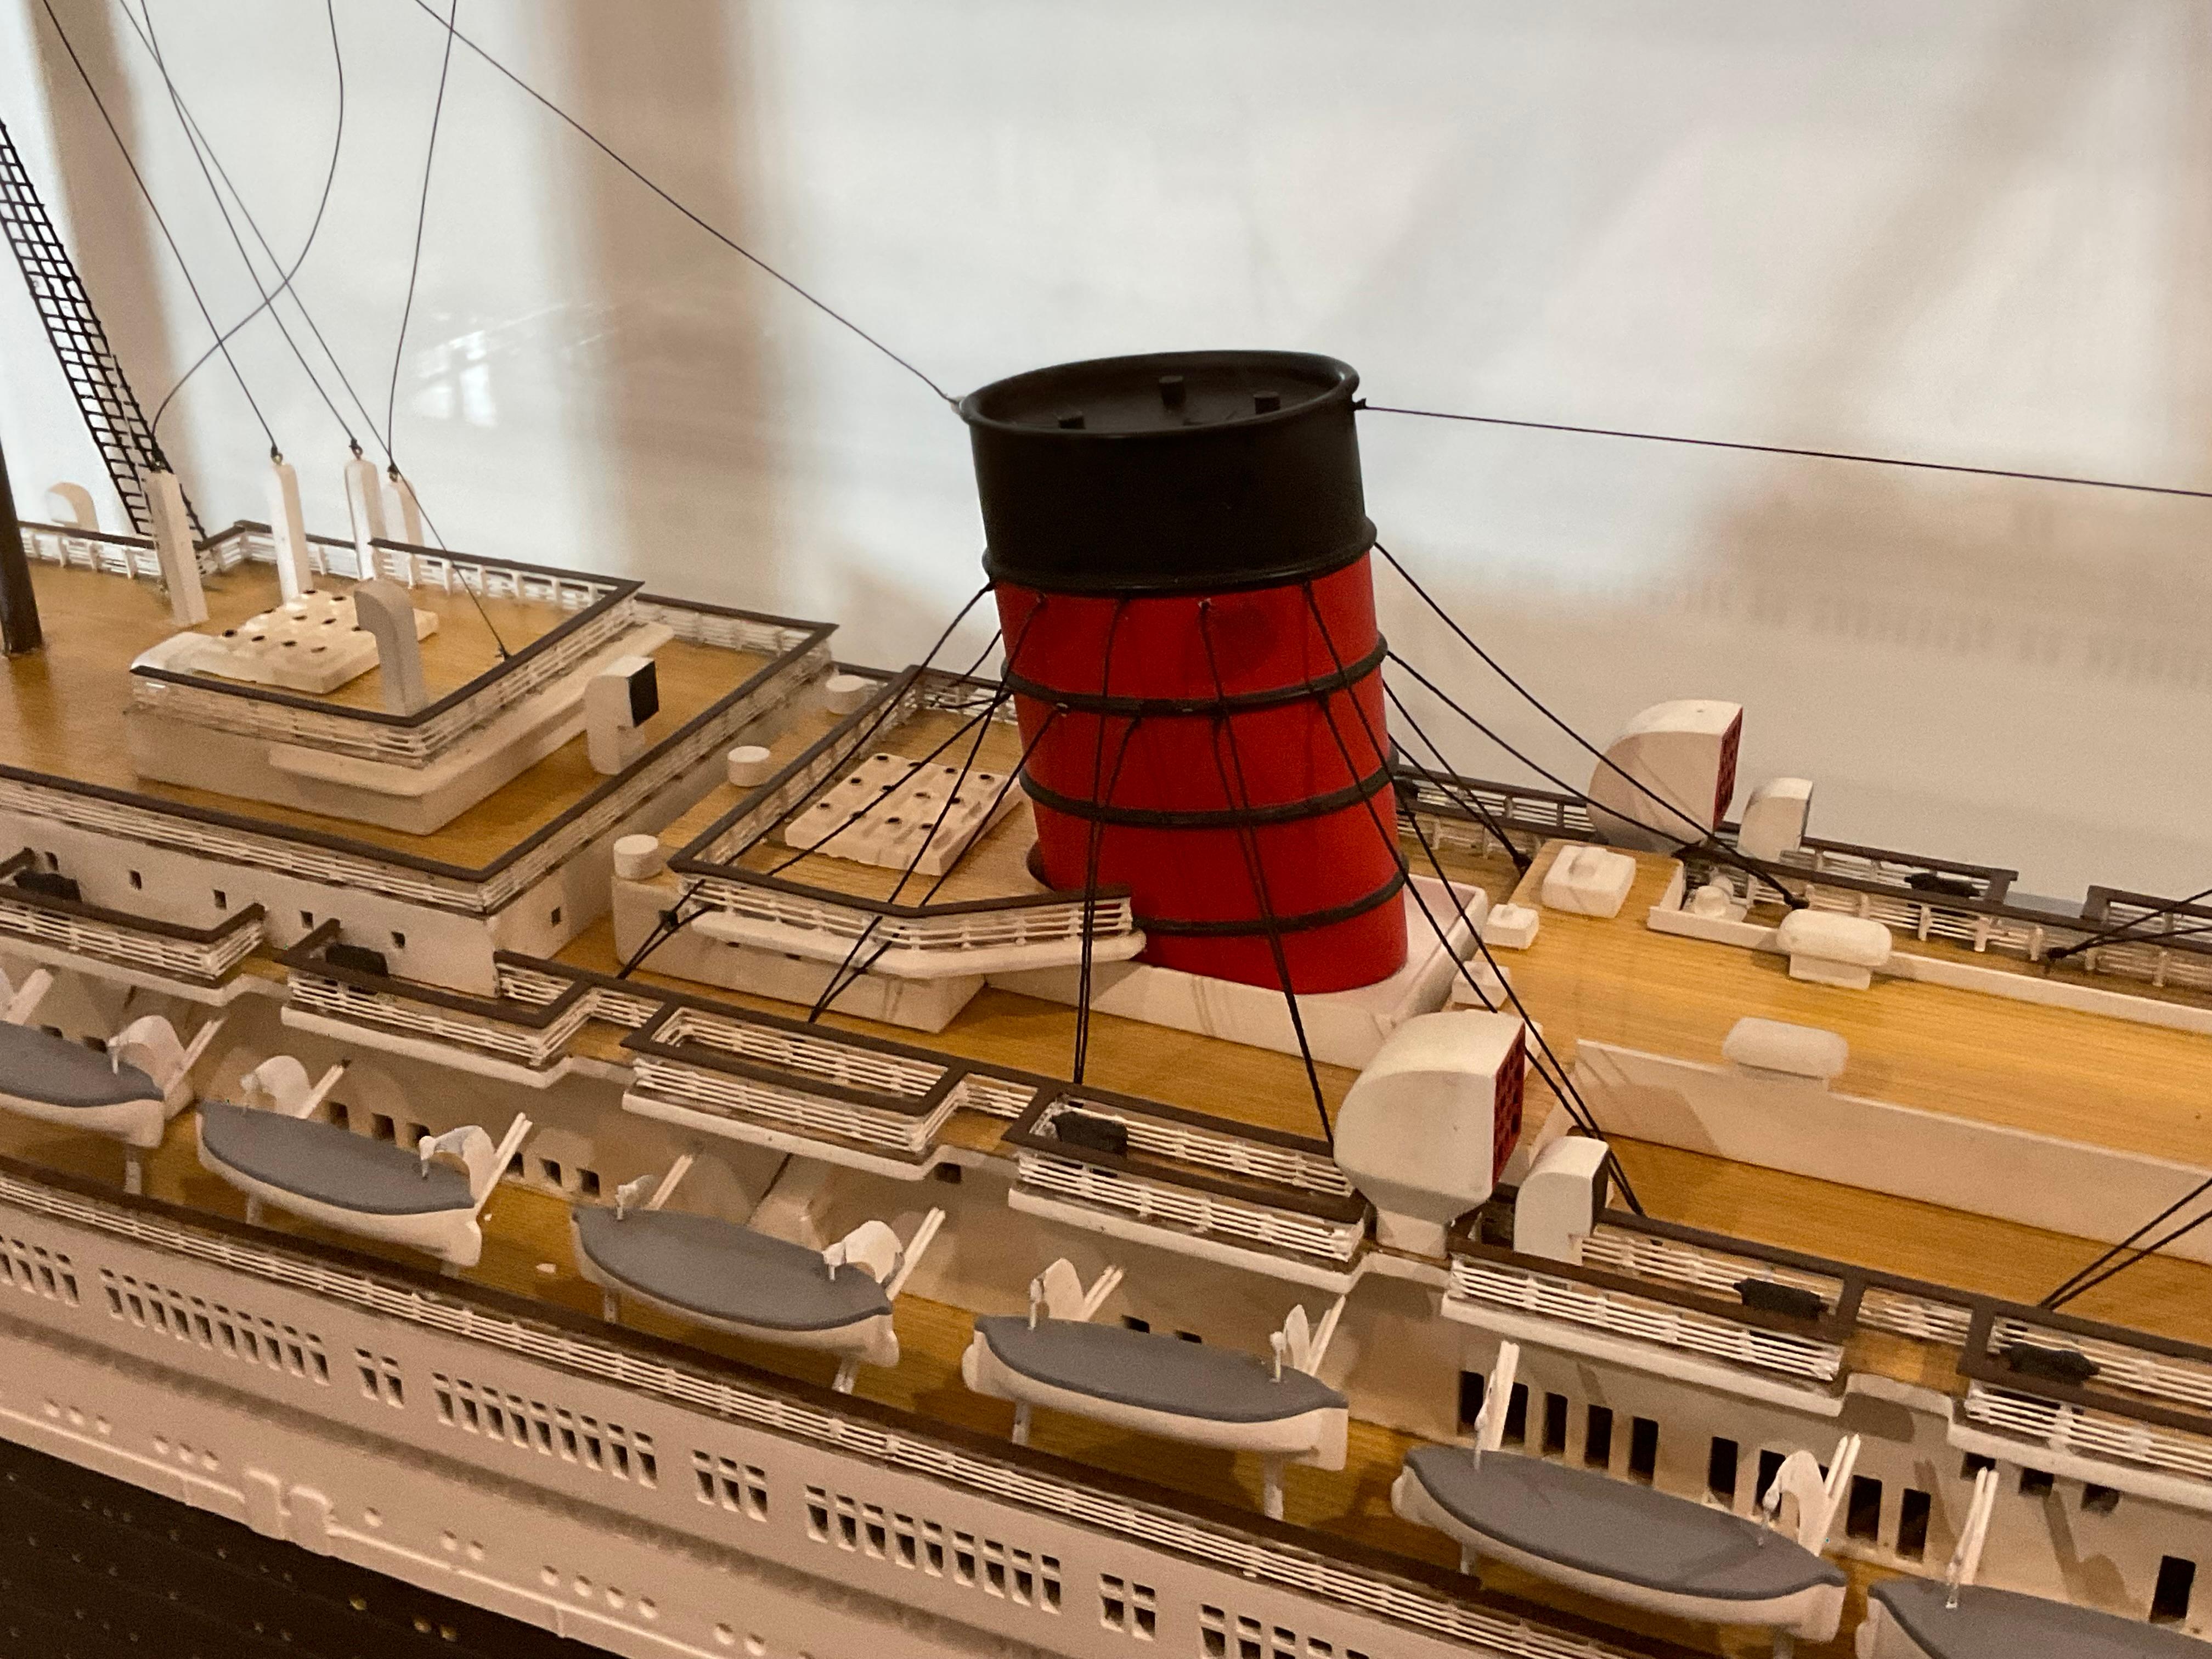 Ocean Liner Queen Mary Ship Model For Sale 3